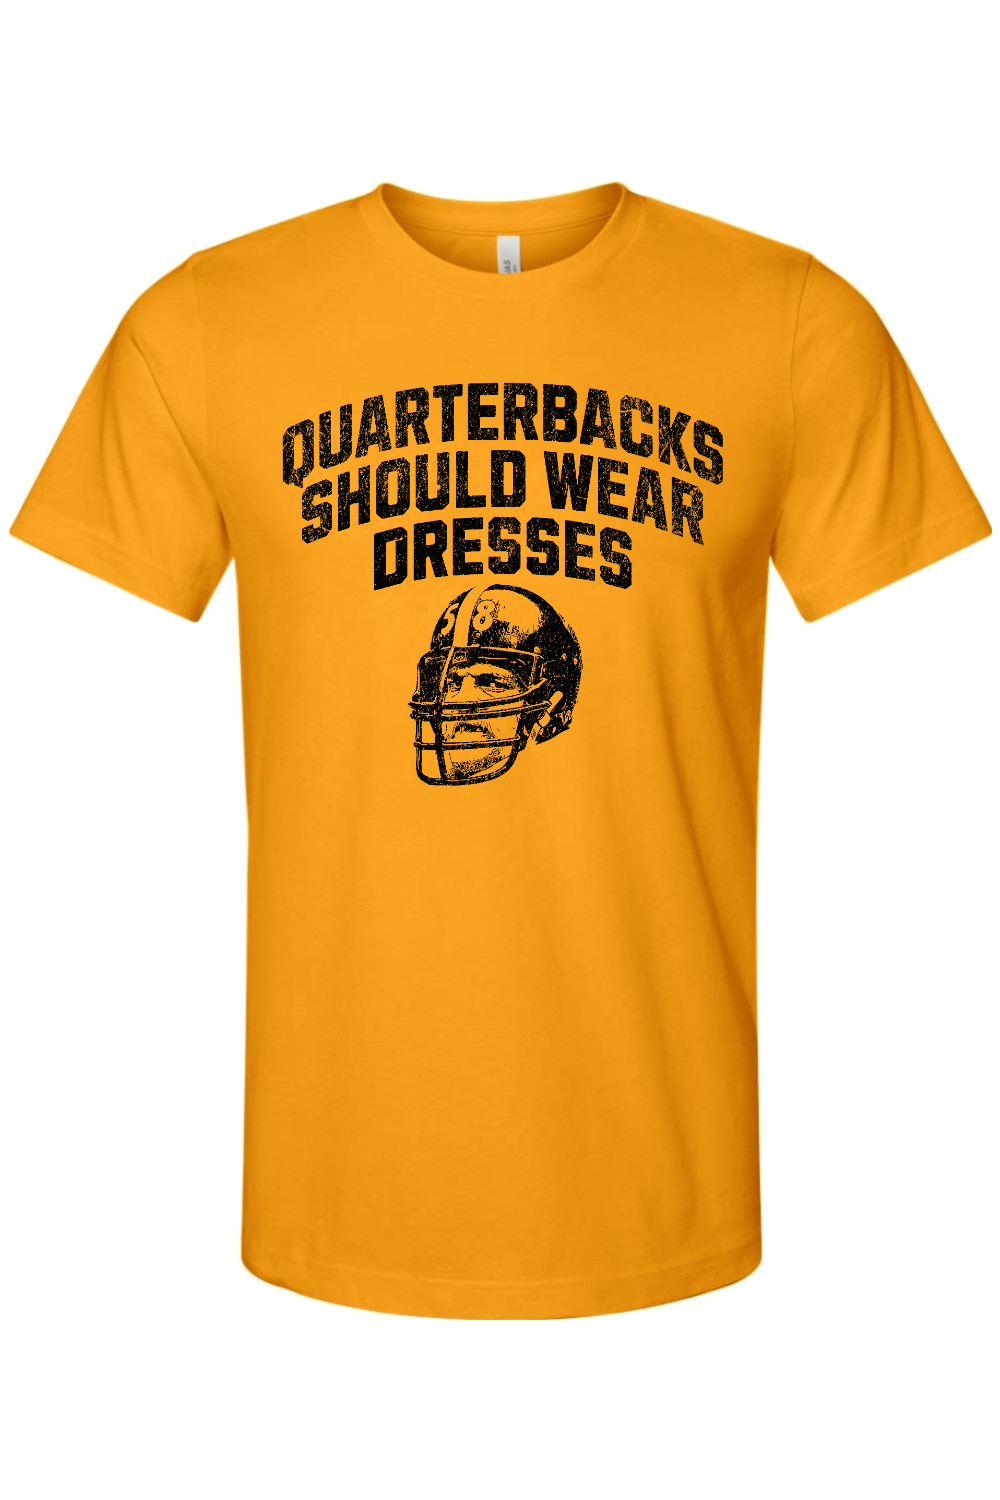 Quarterbacks Should Wear Dresses - Yinzylvania